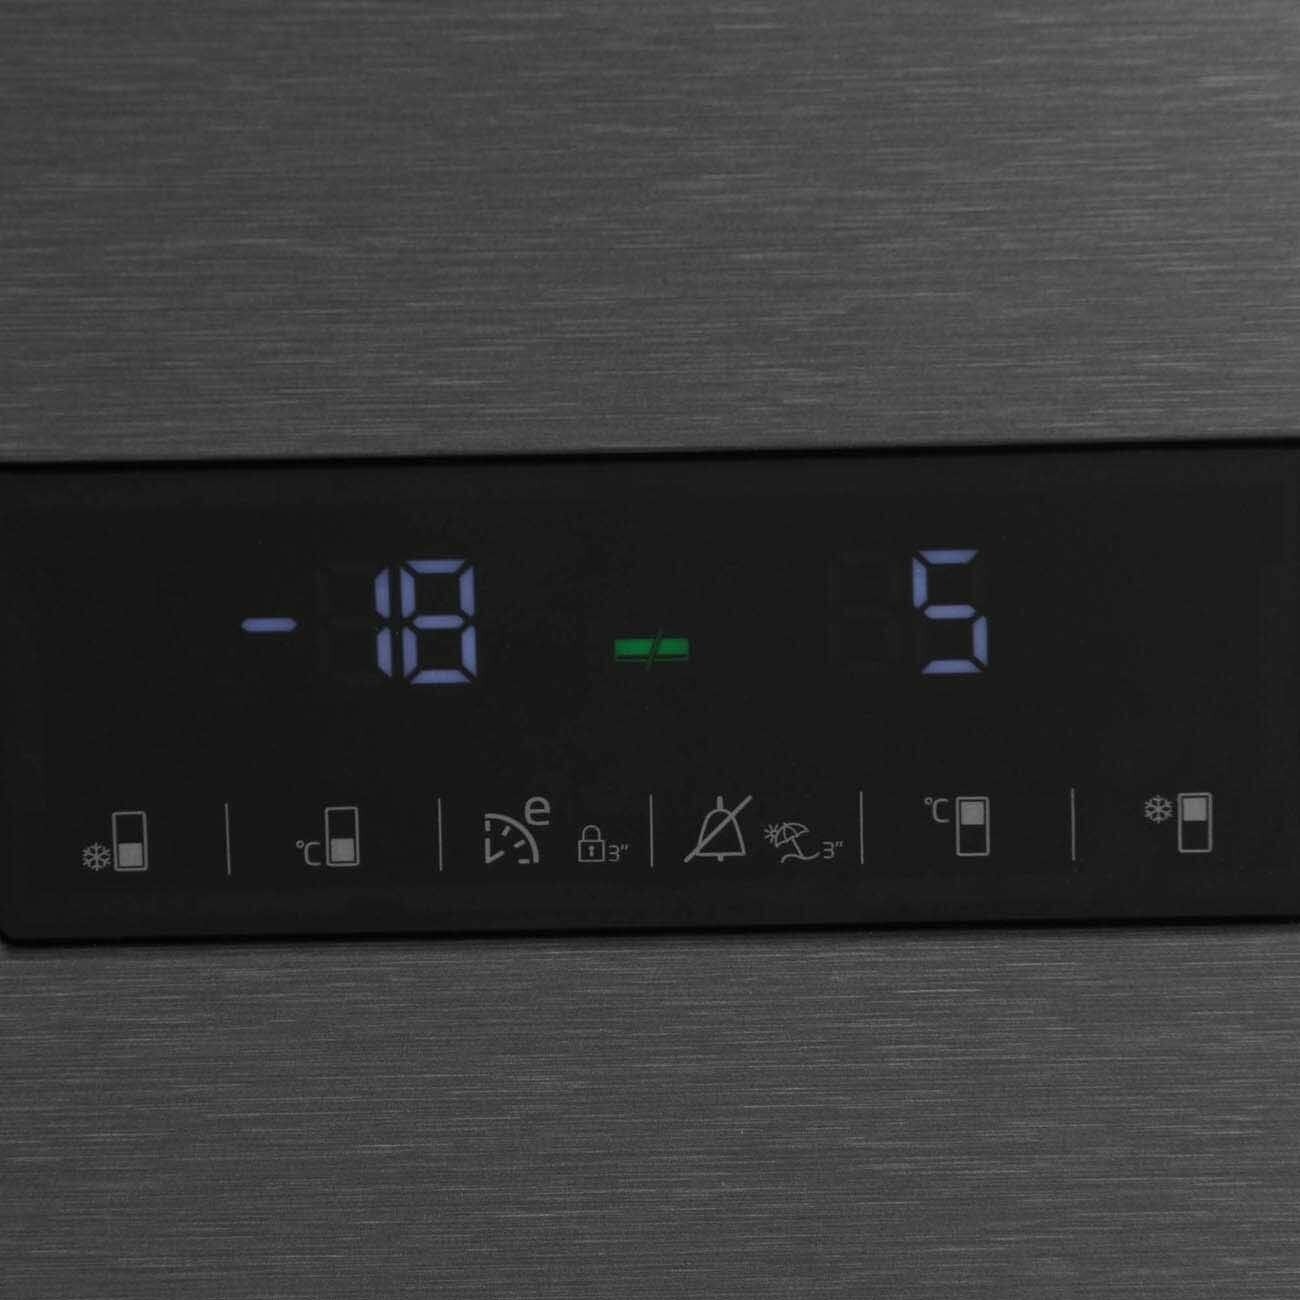 Холодильник Beko CNMV5335E20VXR